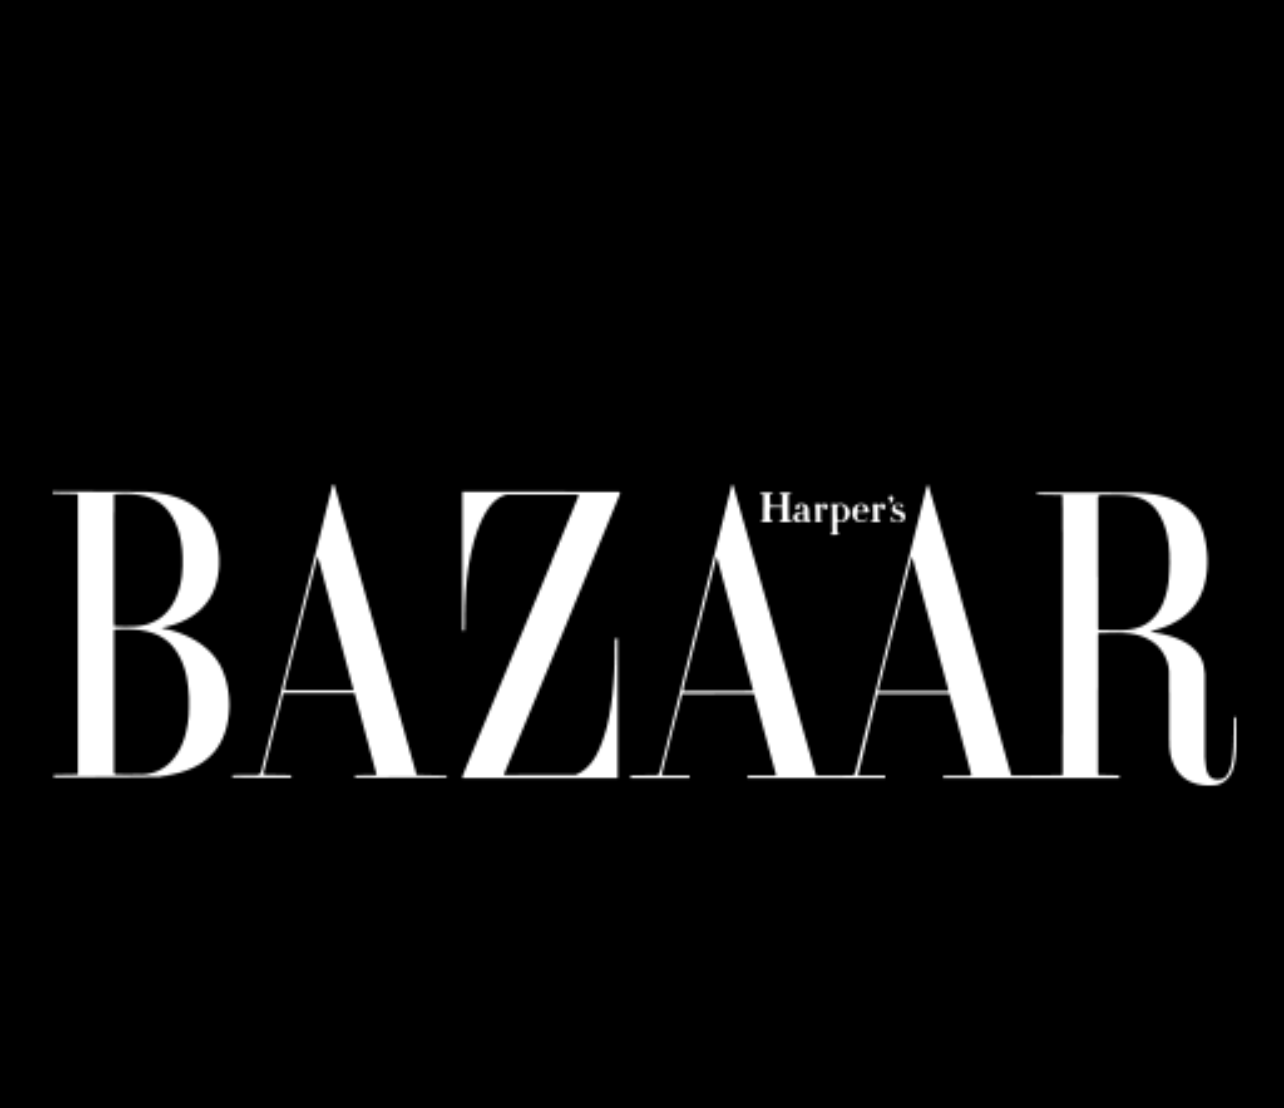 harper's bazaar logo - Google Search.png